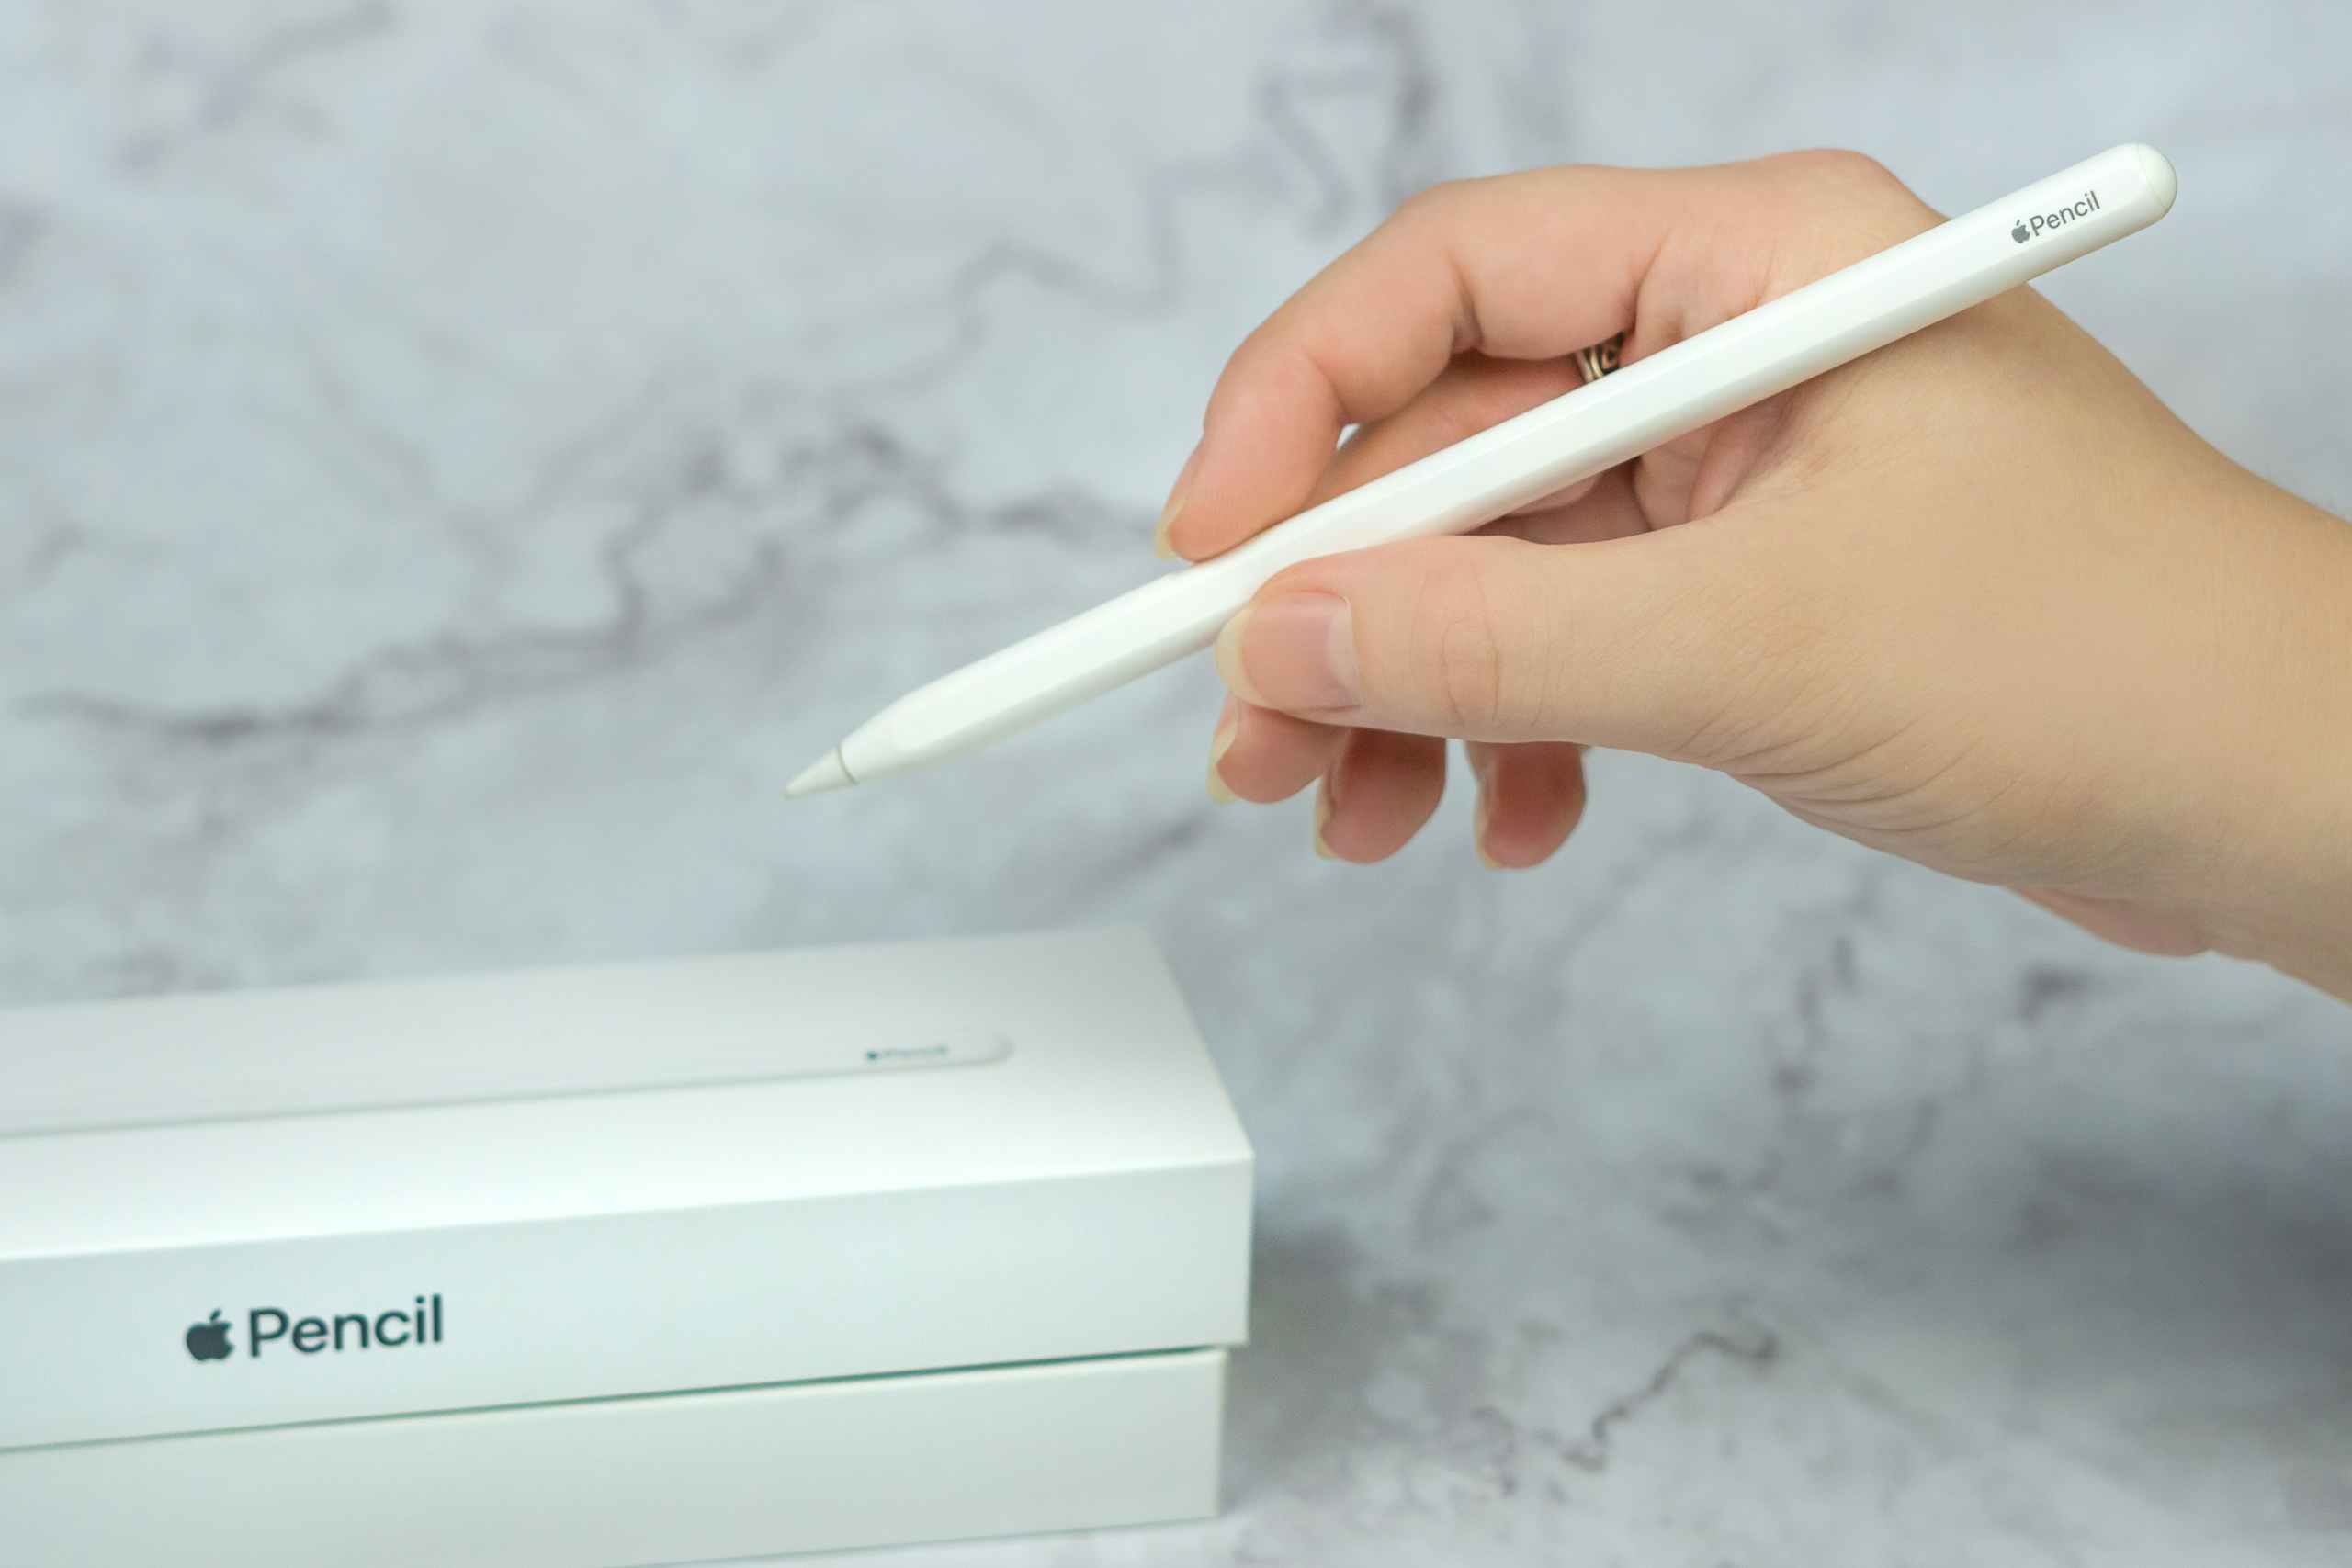 Apple Pencil 2nd Generation, Just $79 on Amazon